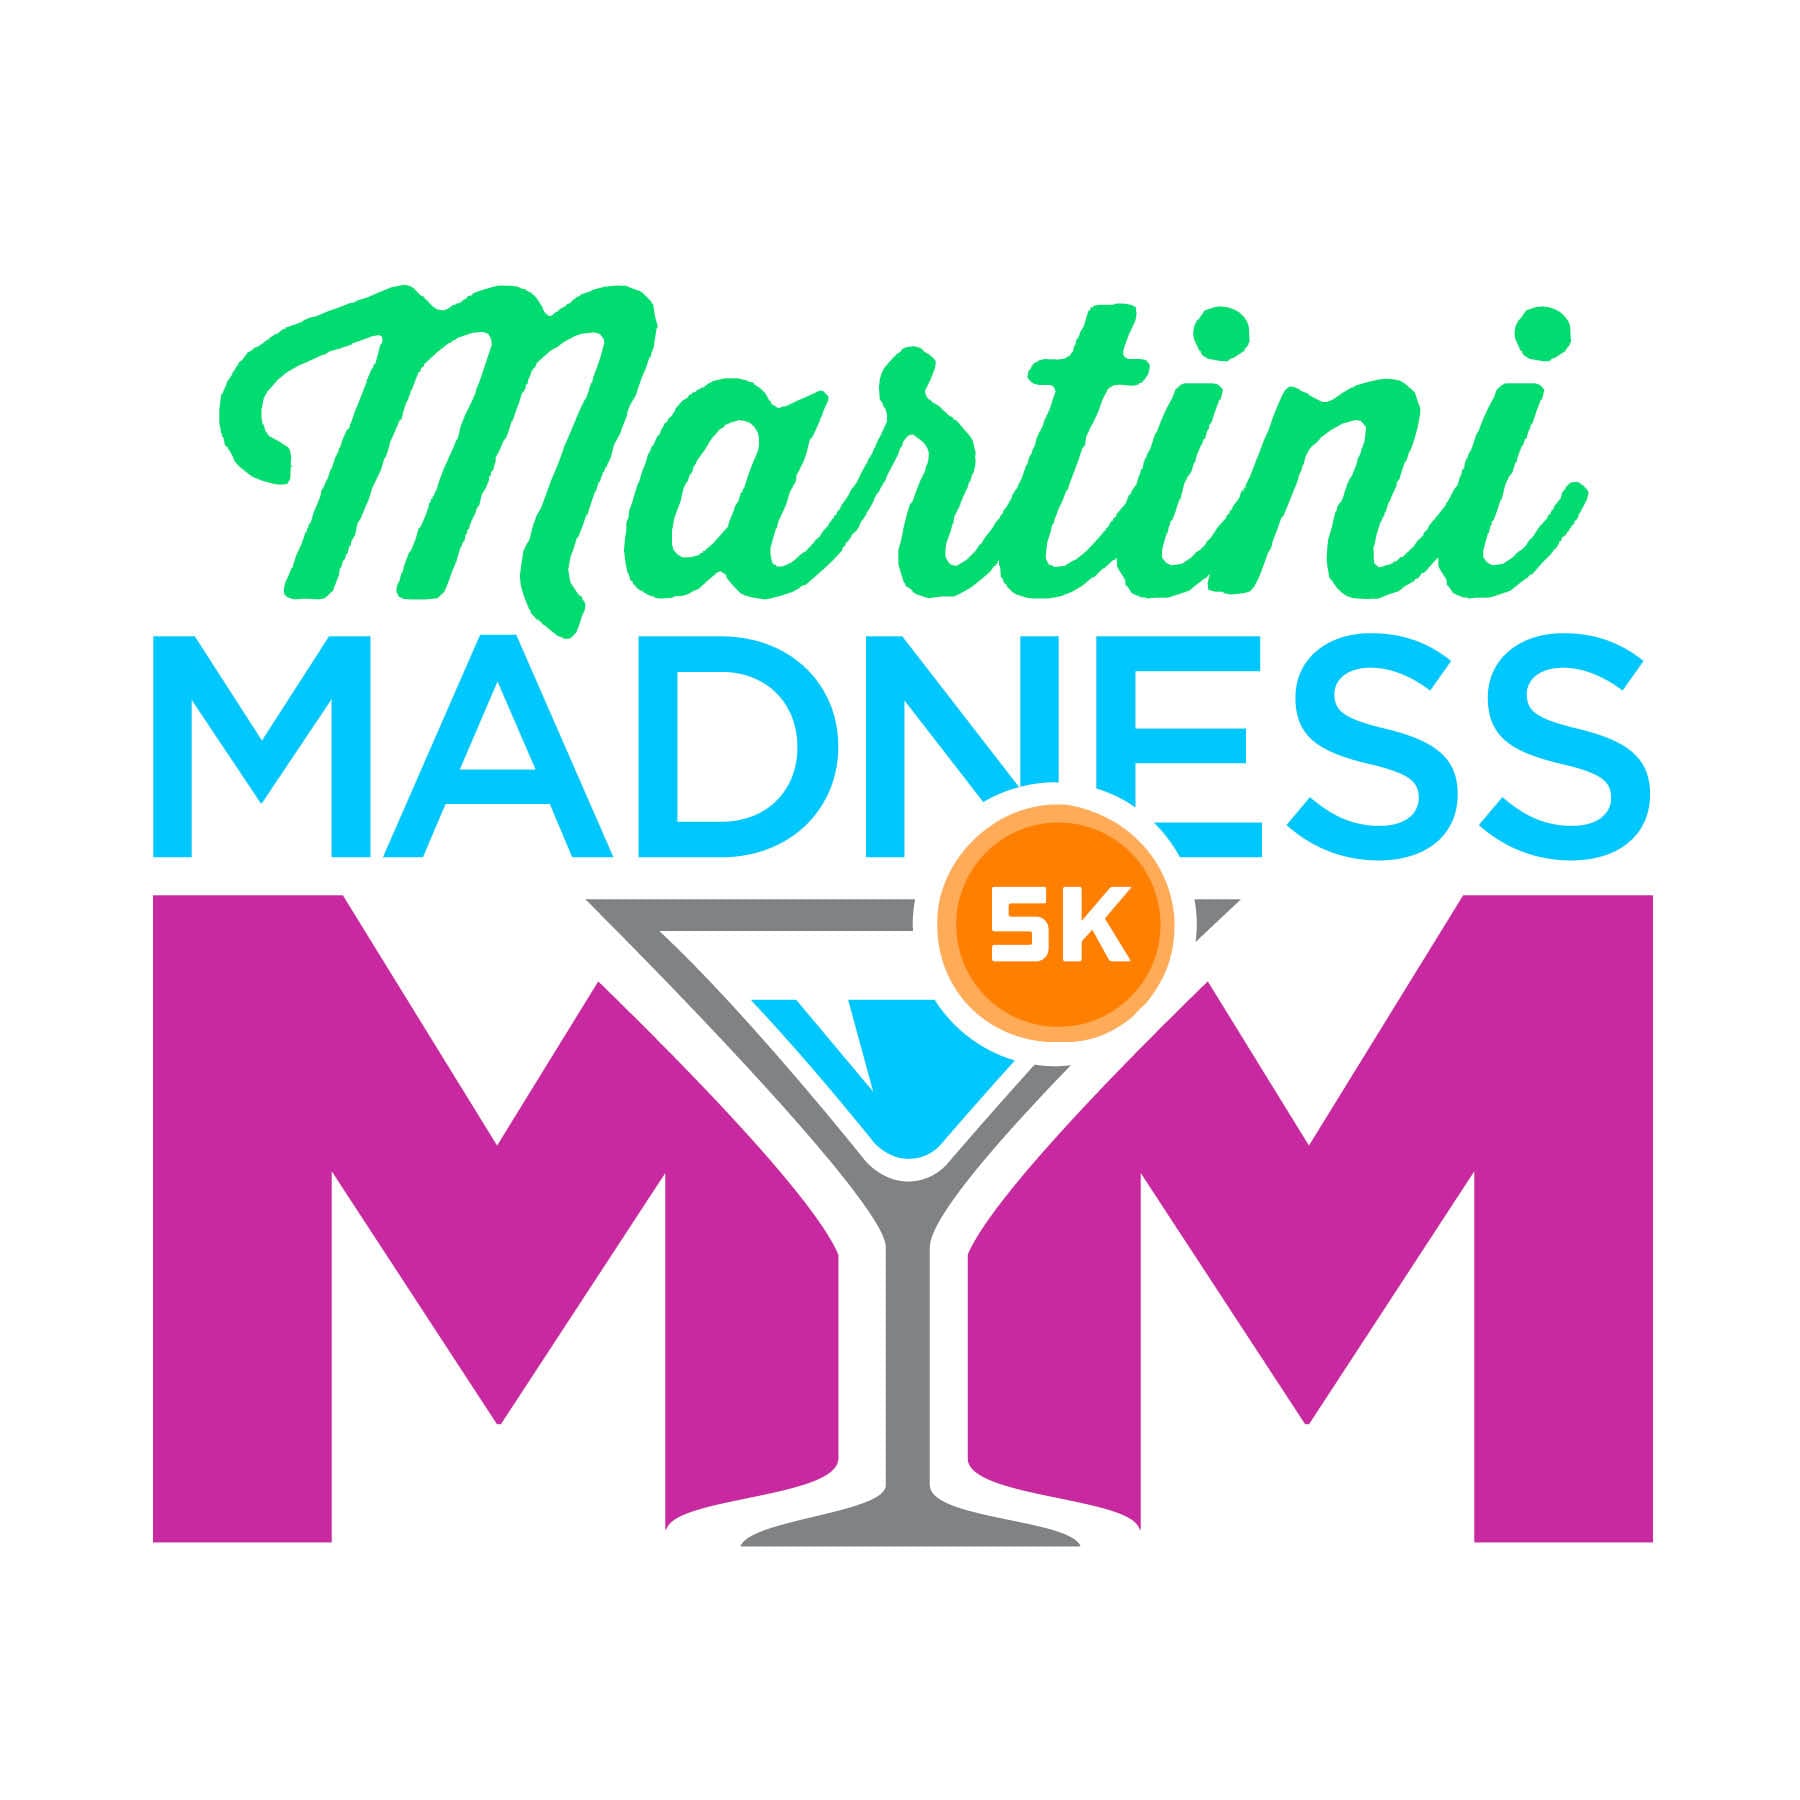 Martini Madness 5K logo on RaceRaves